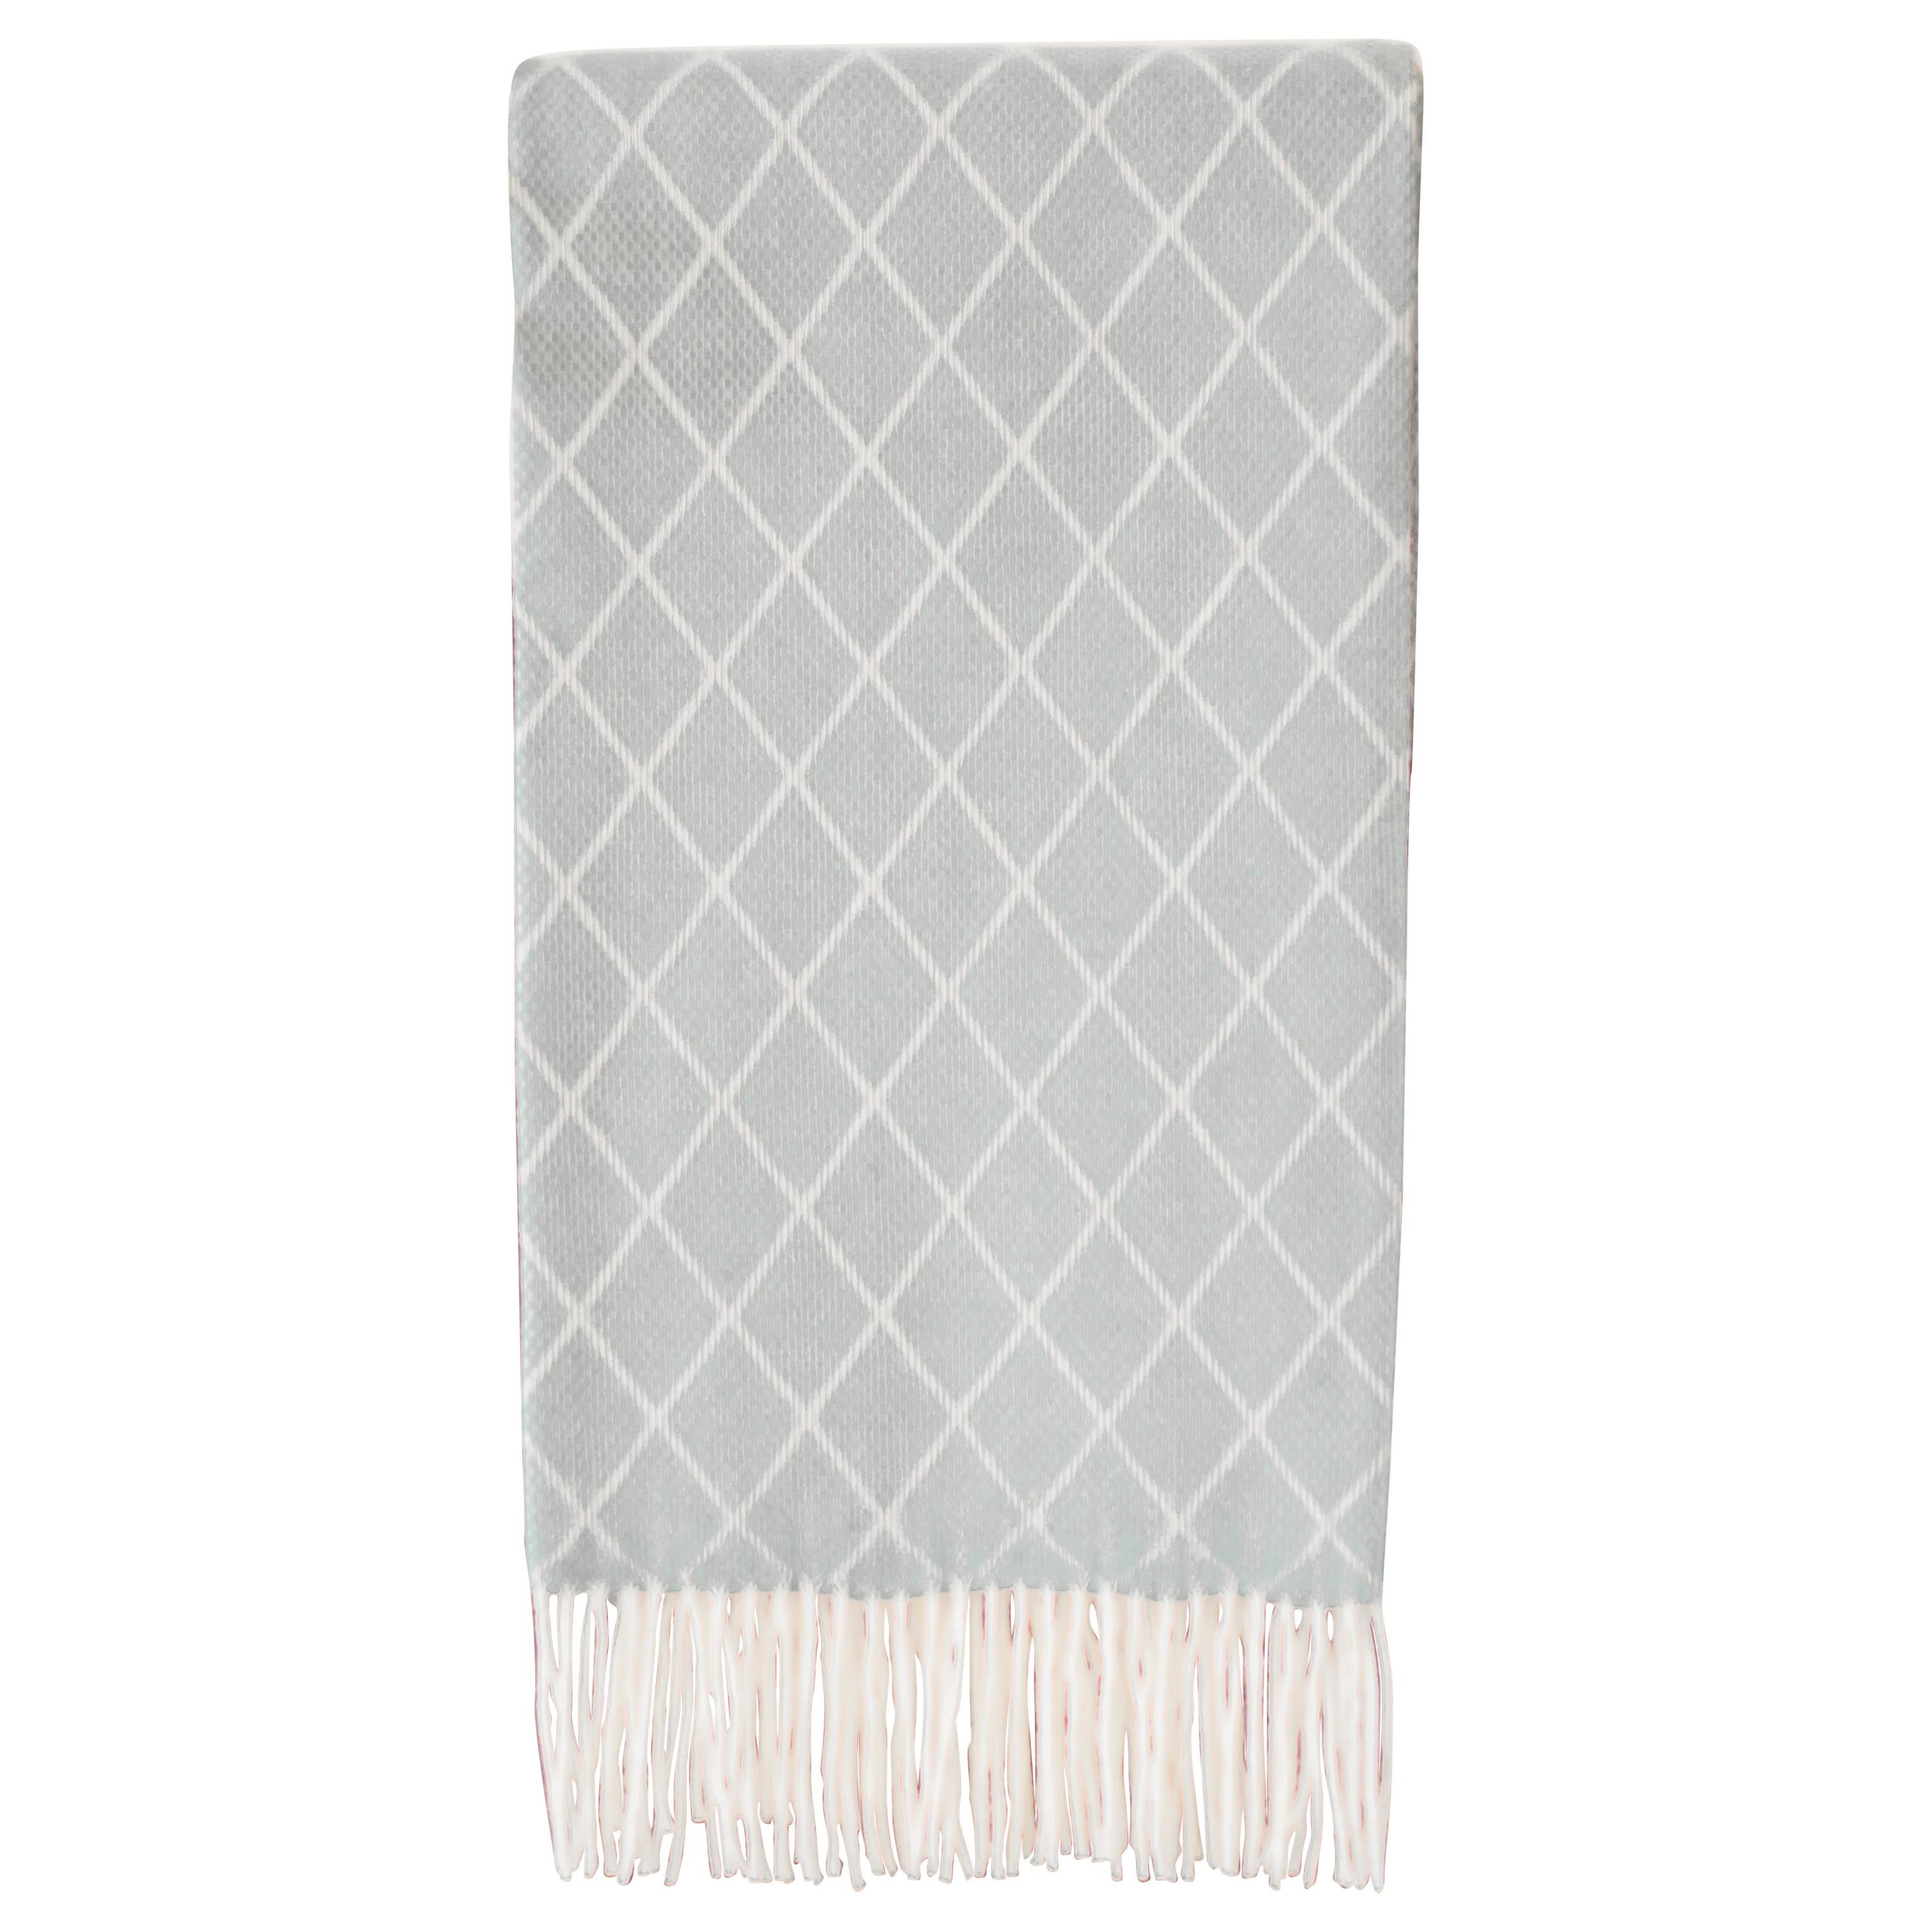 Hand Finished Organic Wool Blanket in Light Grey Diamond Pattern